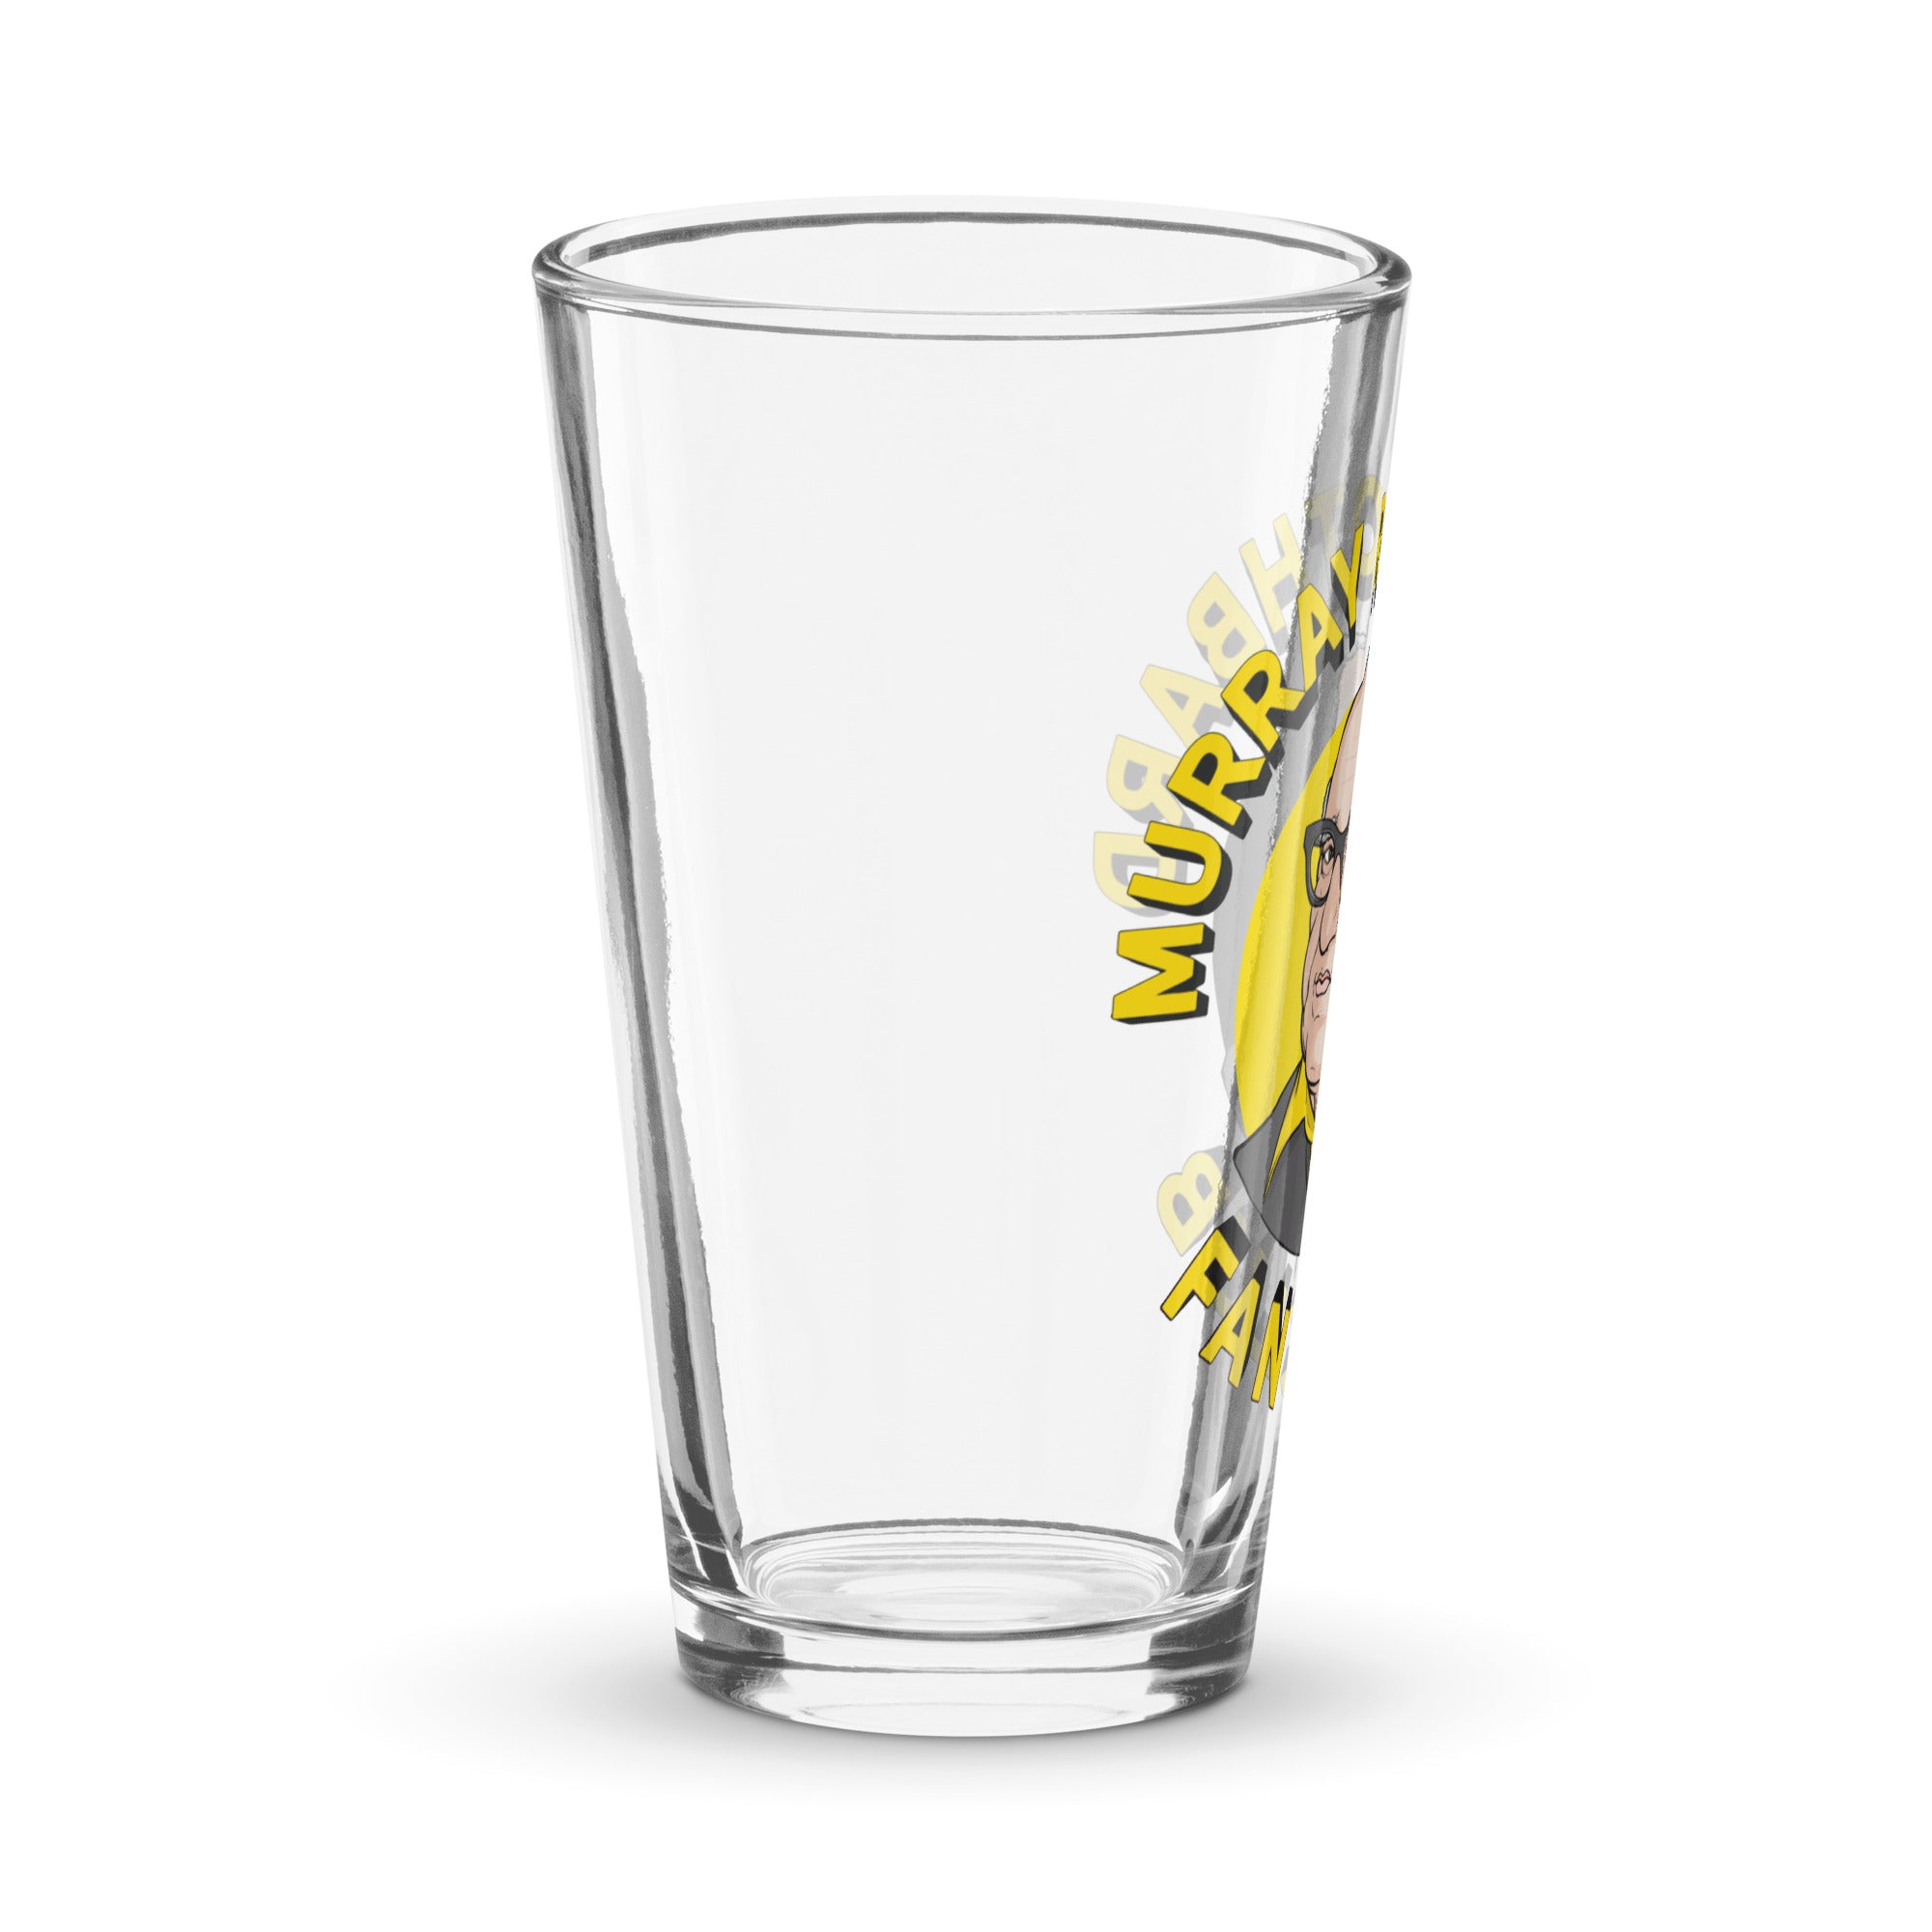 Murray Rothbard Fan Club Pint Glass